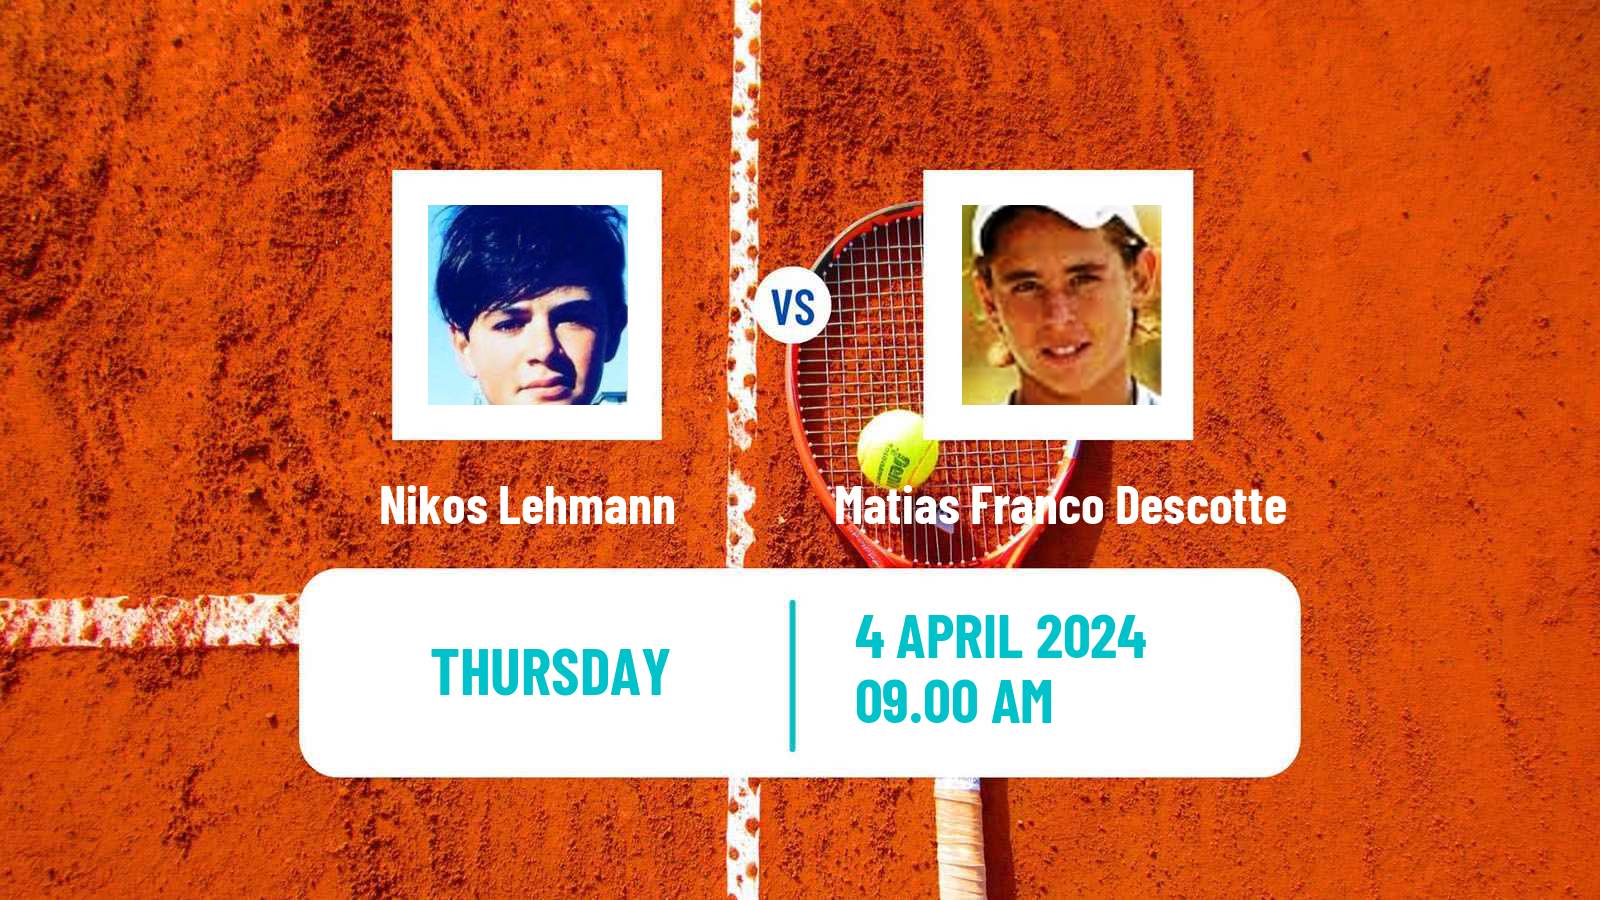 Tennis ITF M15 Bragado 2 Men Nikos Lehmann - Matias Franco Descotte